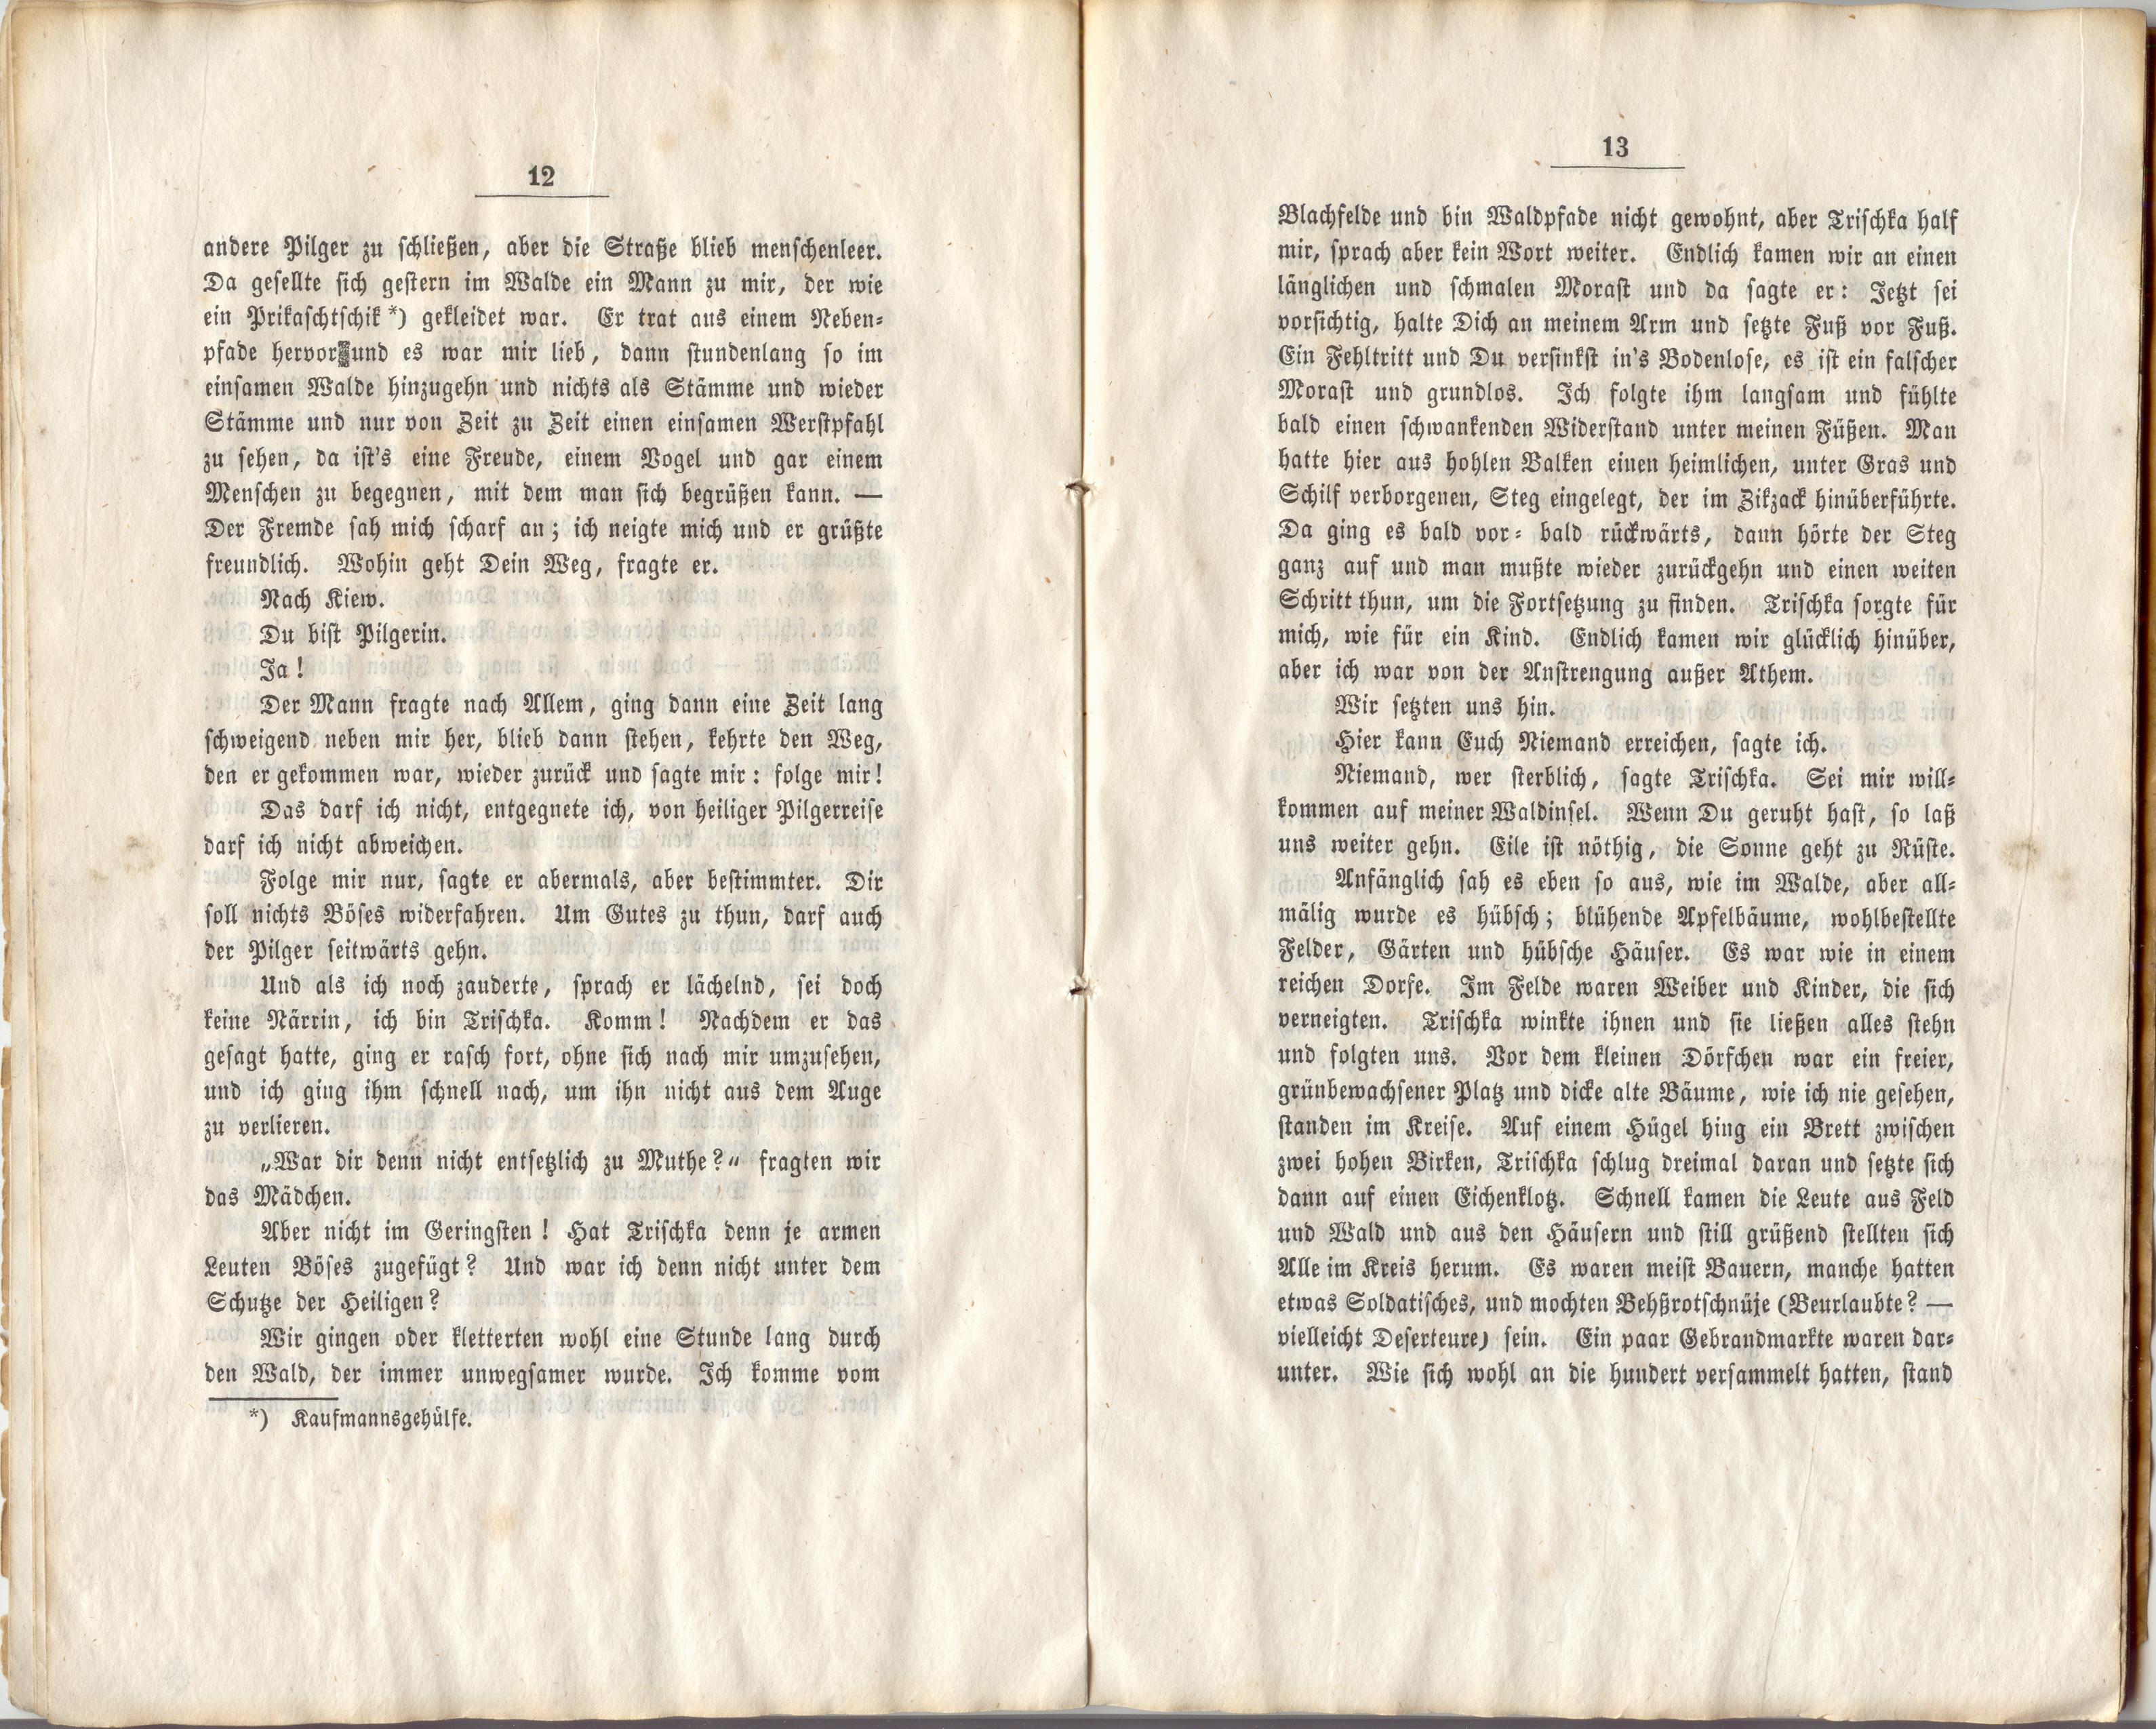 Medicinische Dorfgeschichten (1860) | 24. (12-13) Main body of text